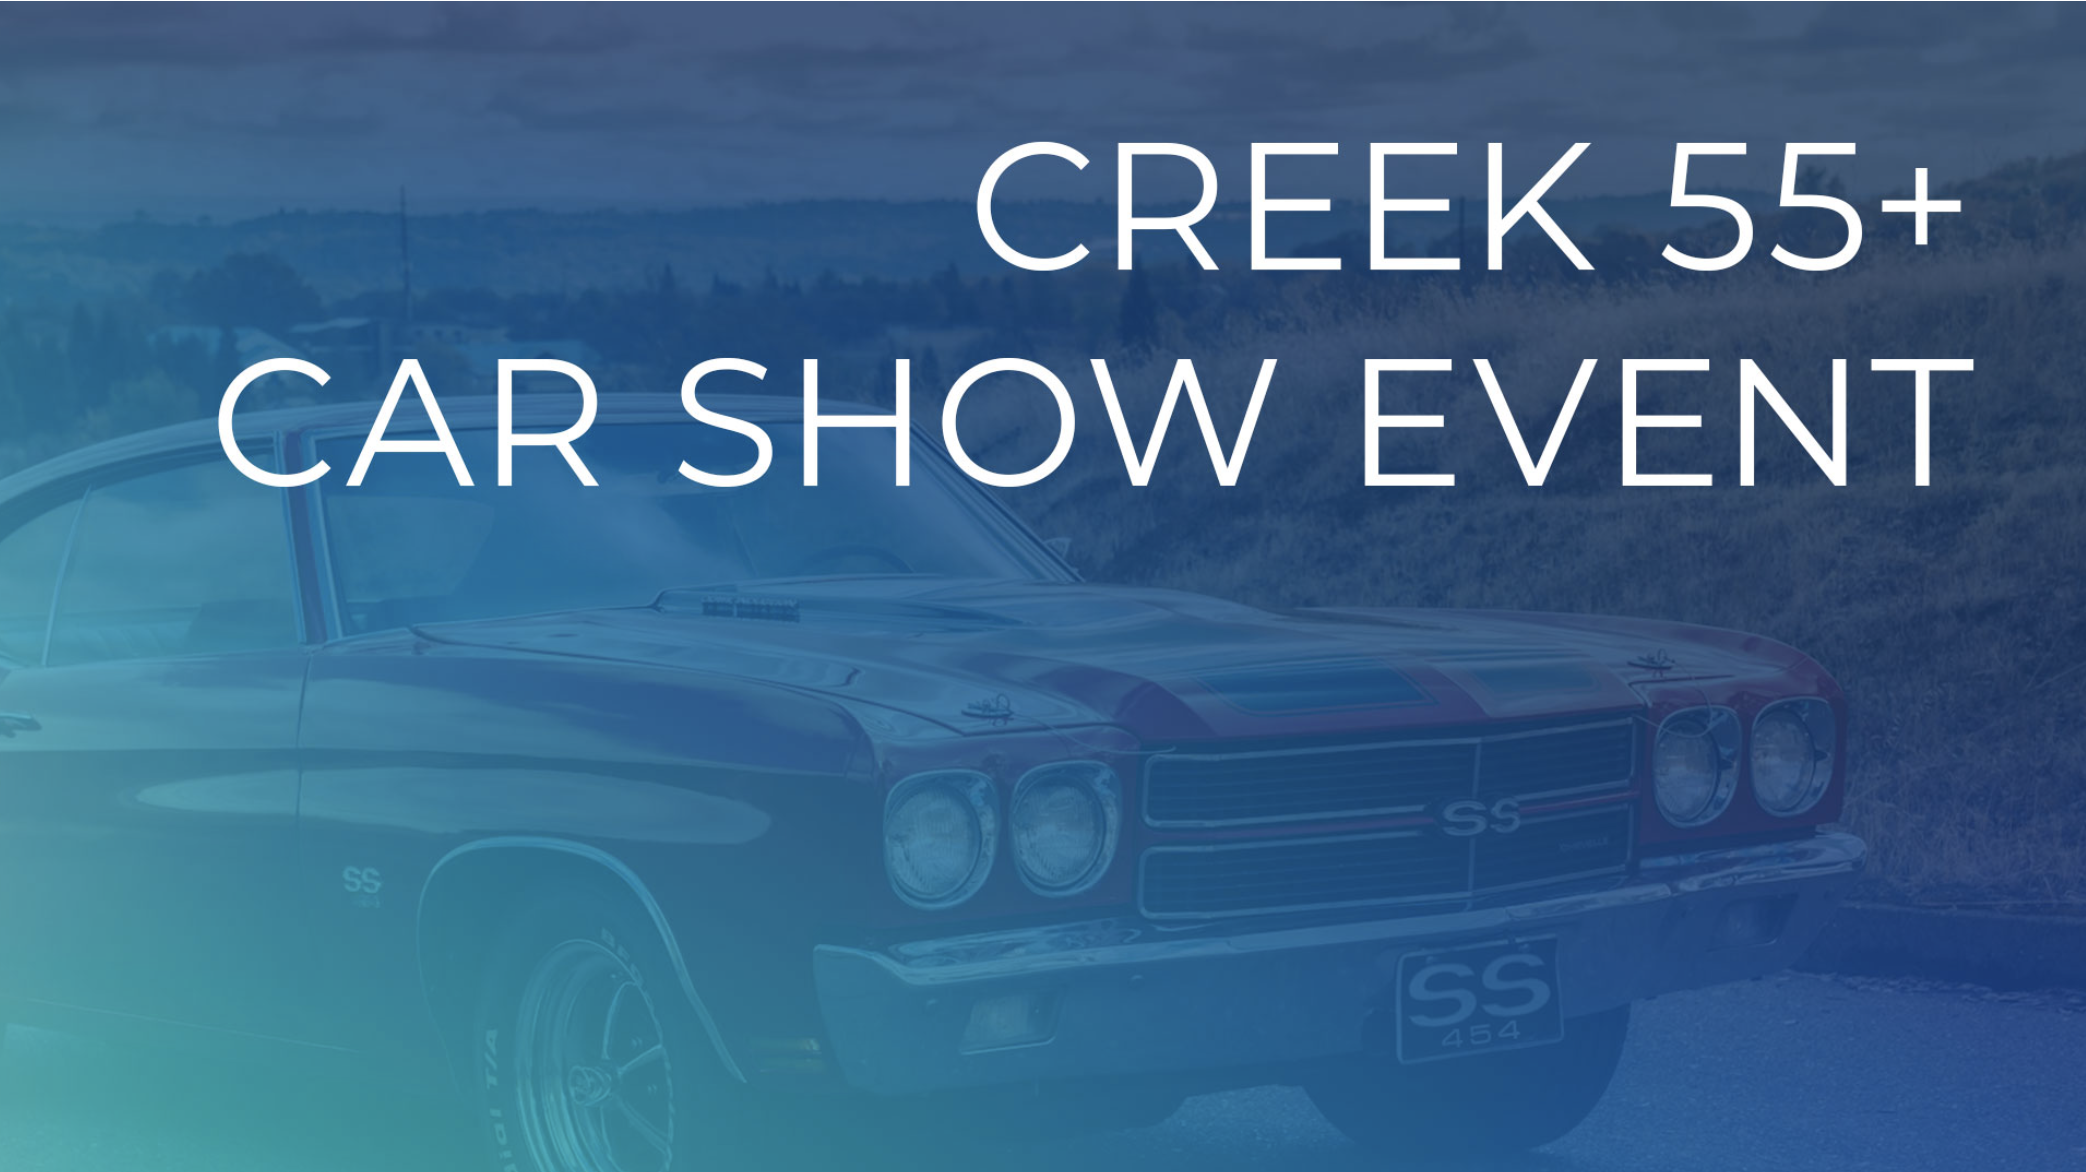 Cottonwood Creek Church - Creek 55+ Car Show Event